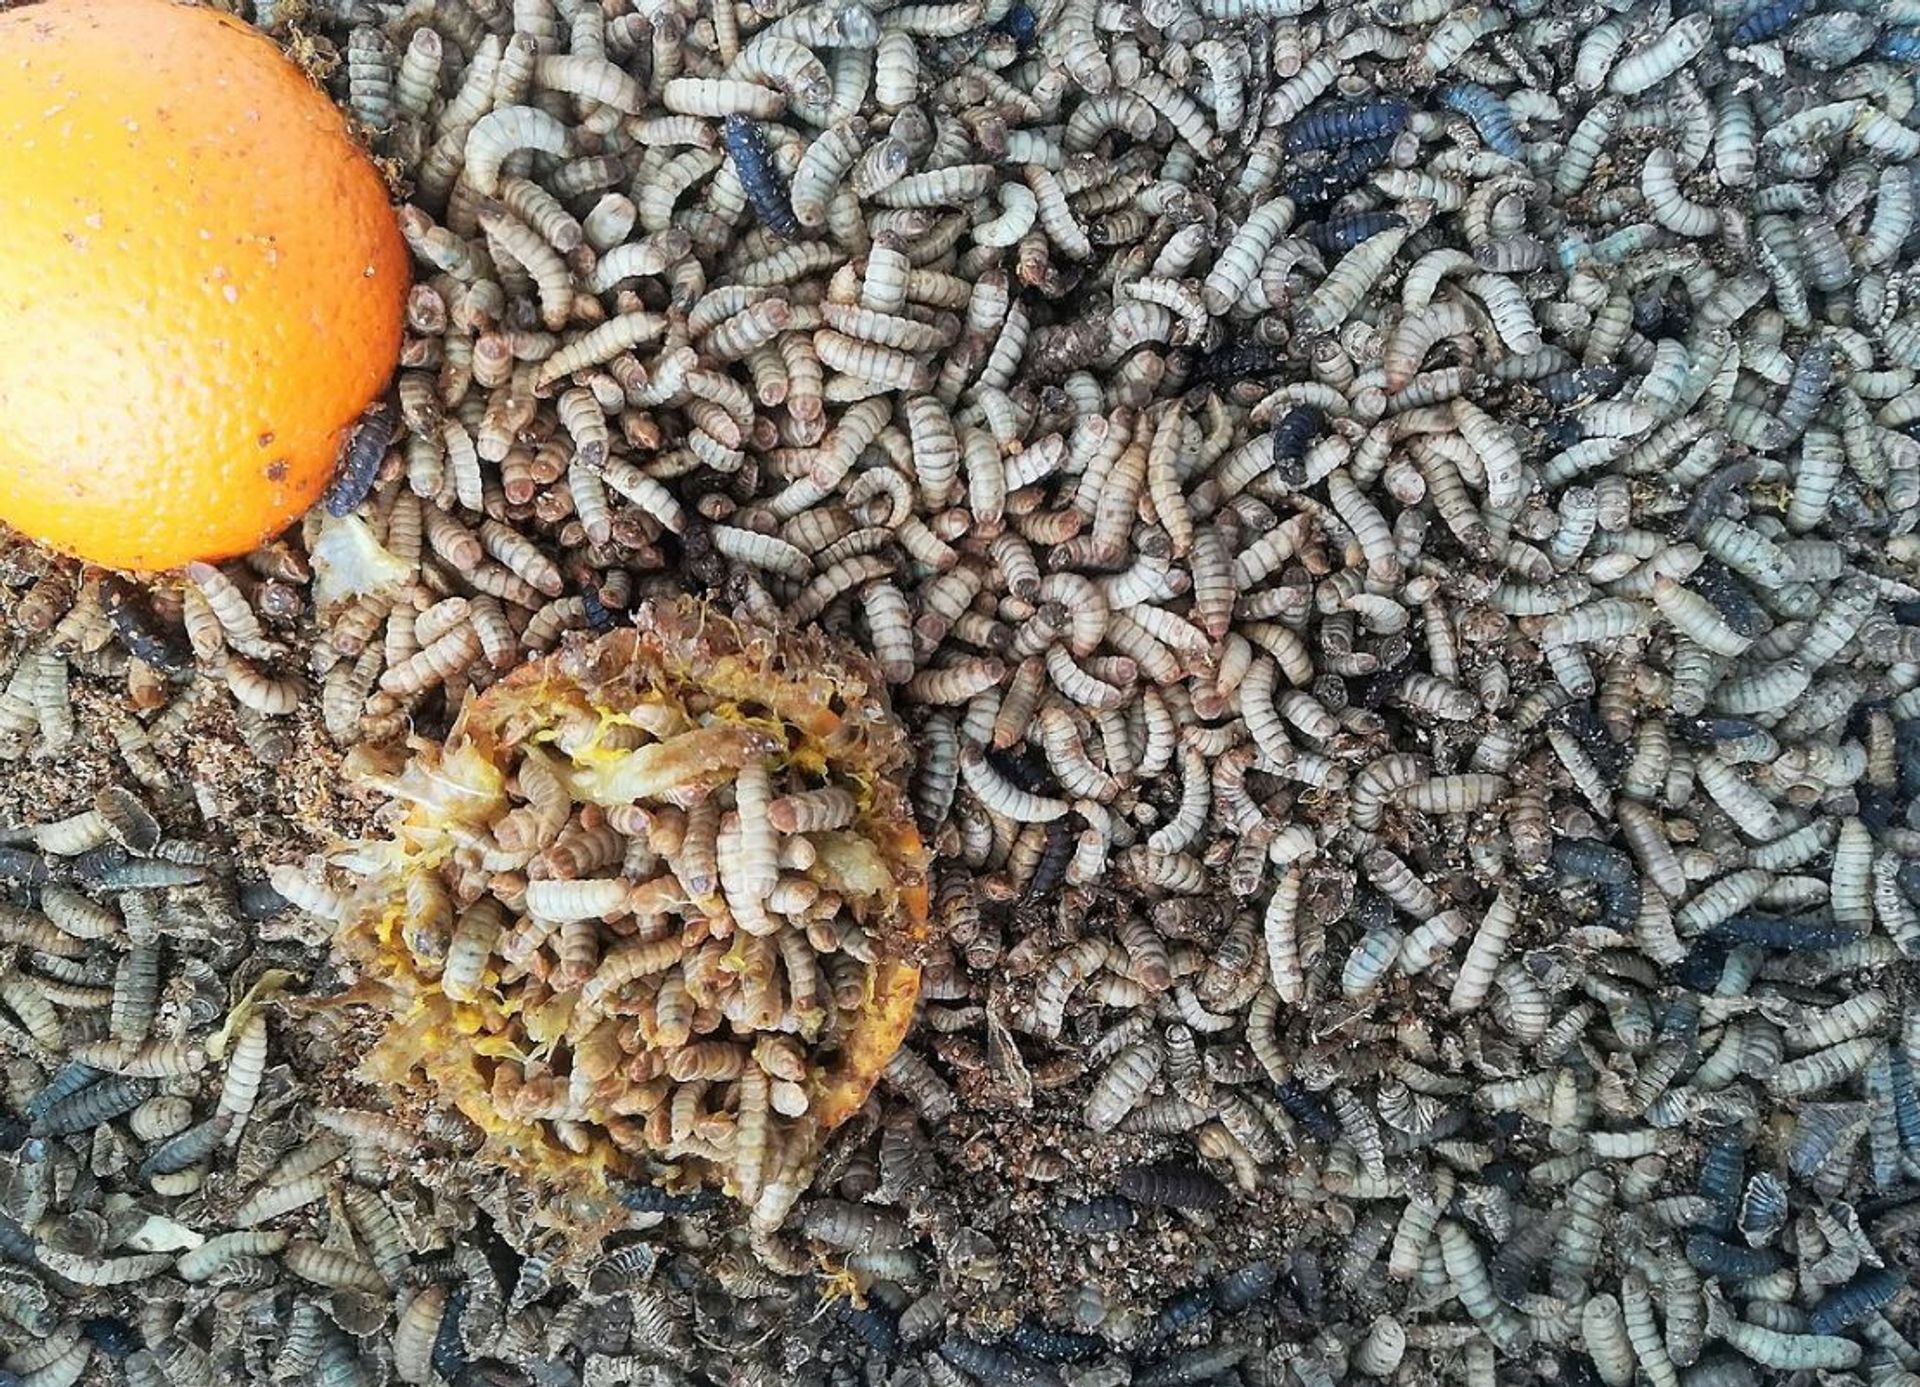 Holenderska firma Protix chce hodować larwy much w Polsce